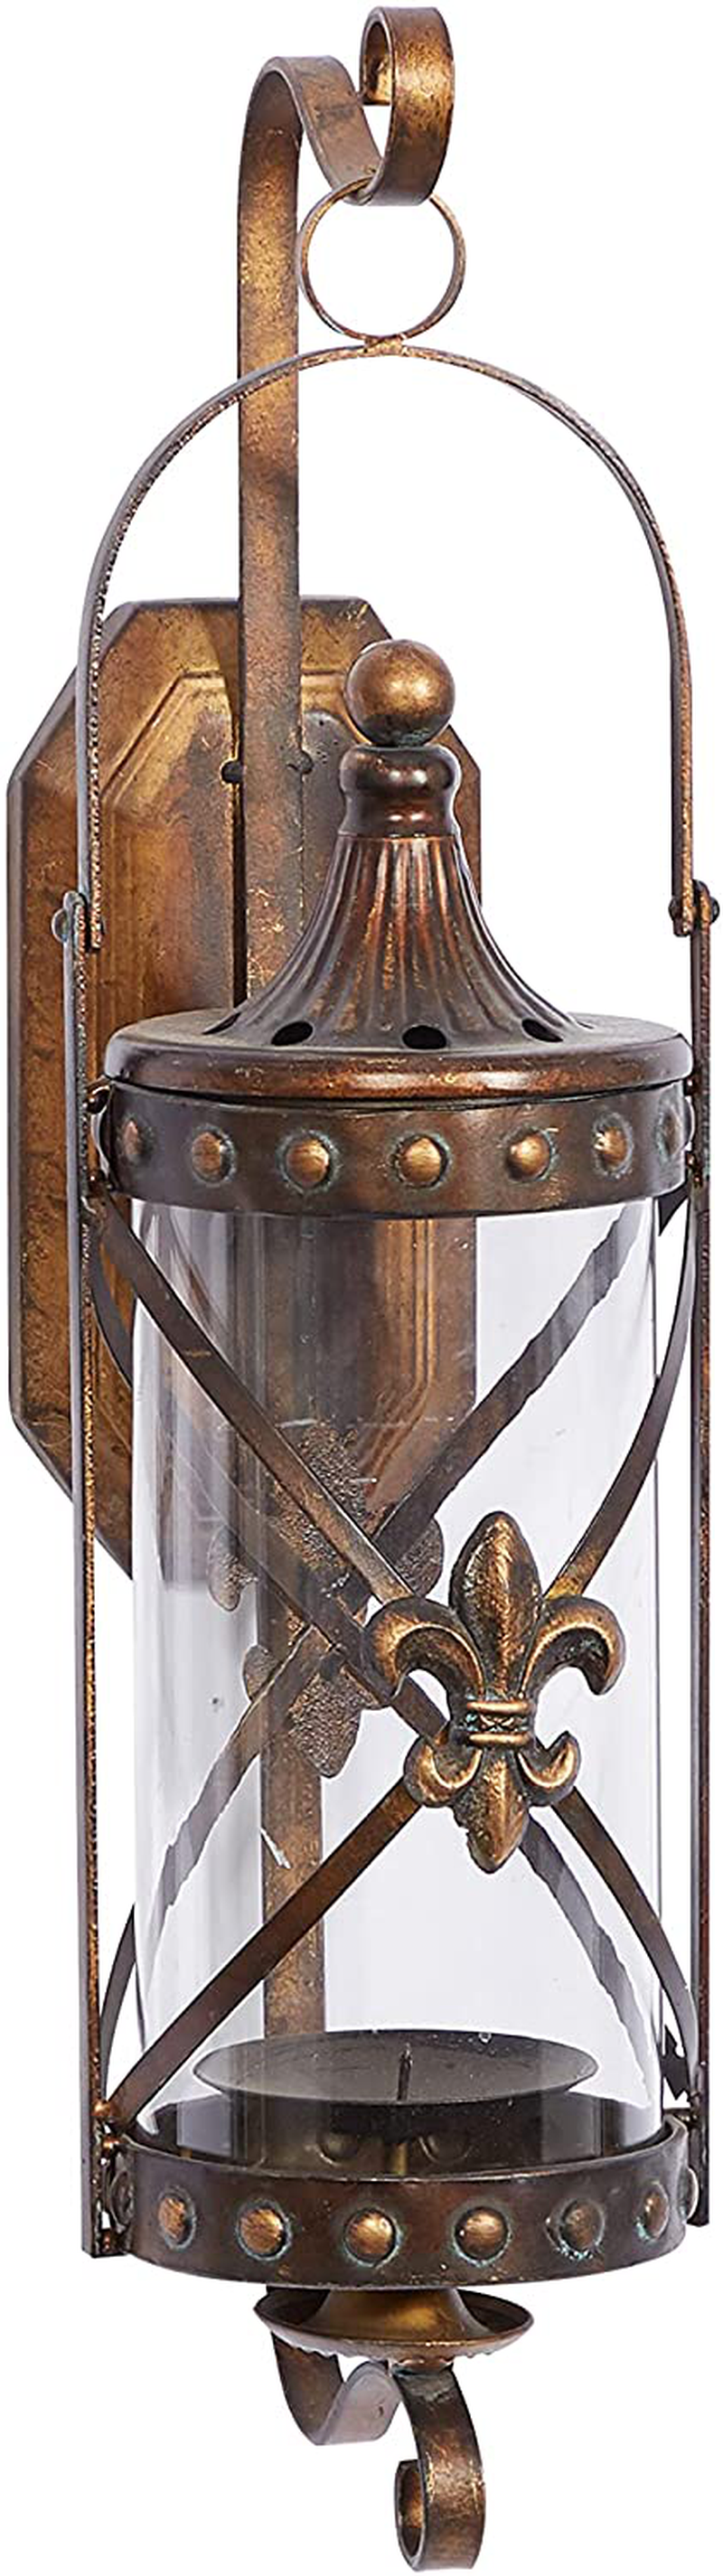 Deco 79 Rustic Fleur-de-Lis-Designed Metal Candle Sconce, 20" H x 7" L, Textured Bronze Finish Home & Garden > Decor > Home Fragrance Accessories > Candle Holders Deco 79   